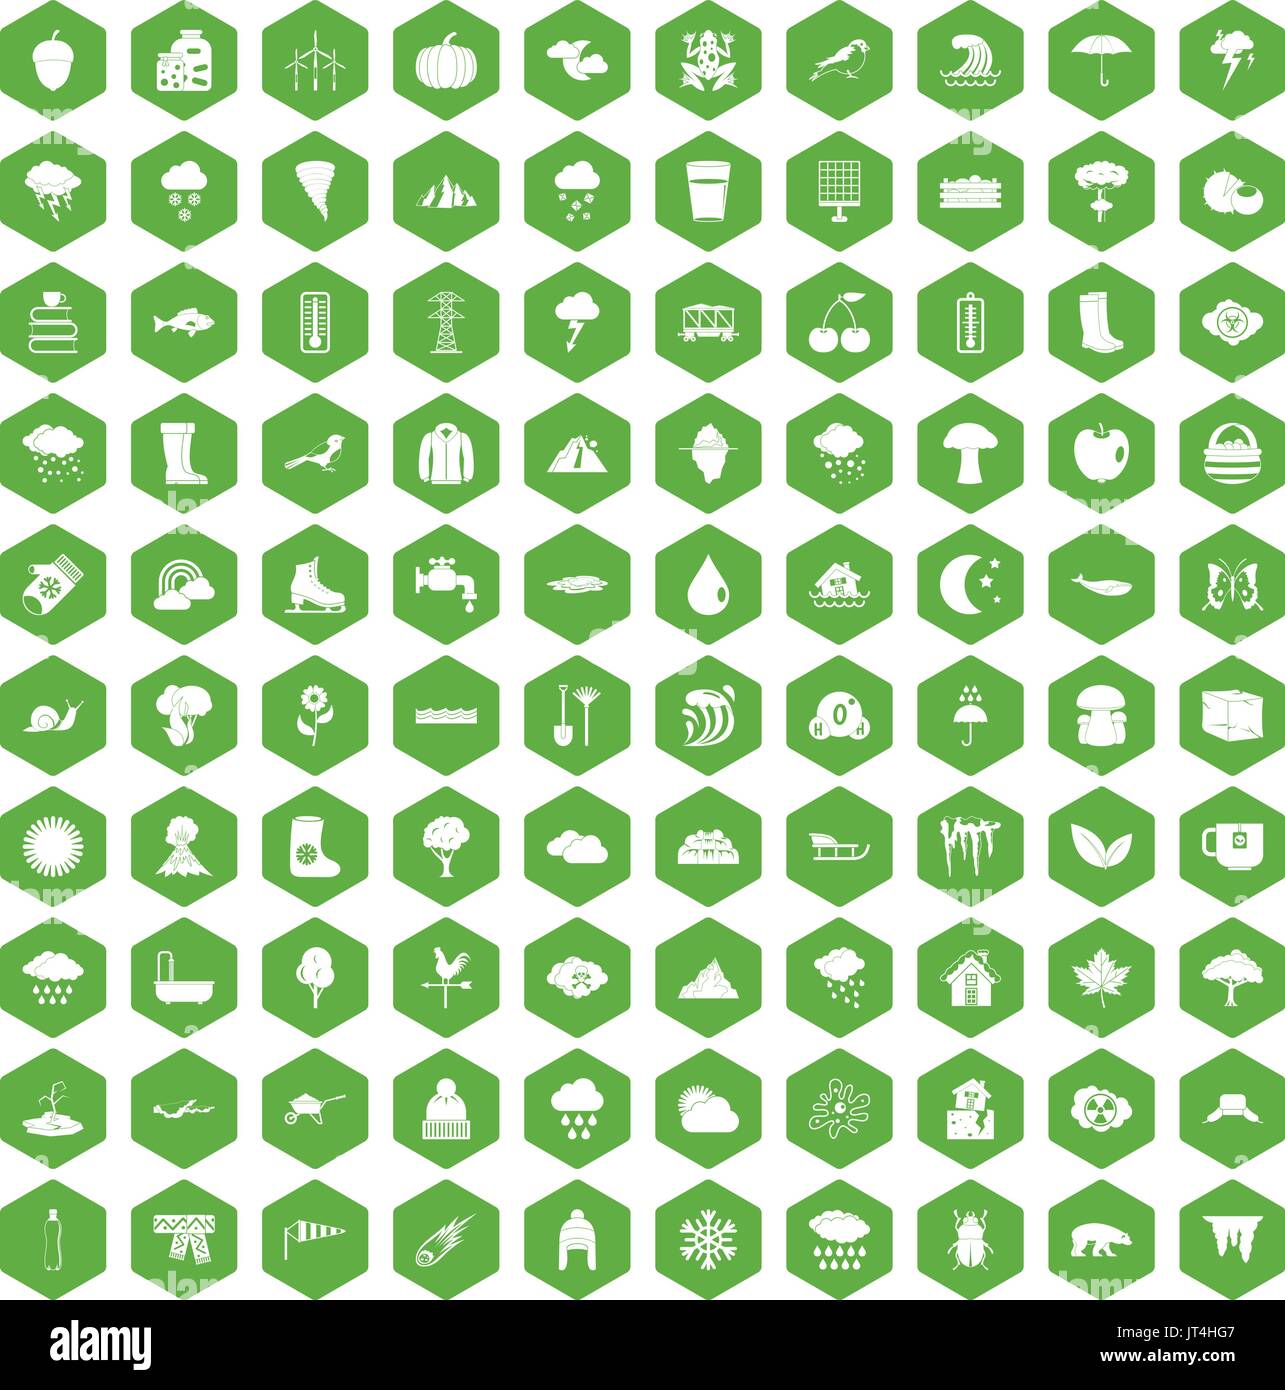 100 clouds icons hexagon green Stock Vector